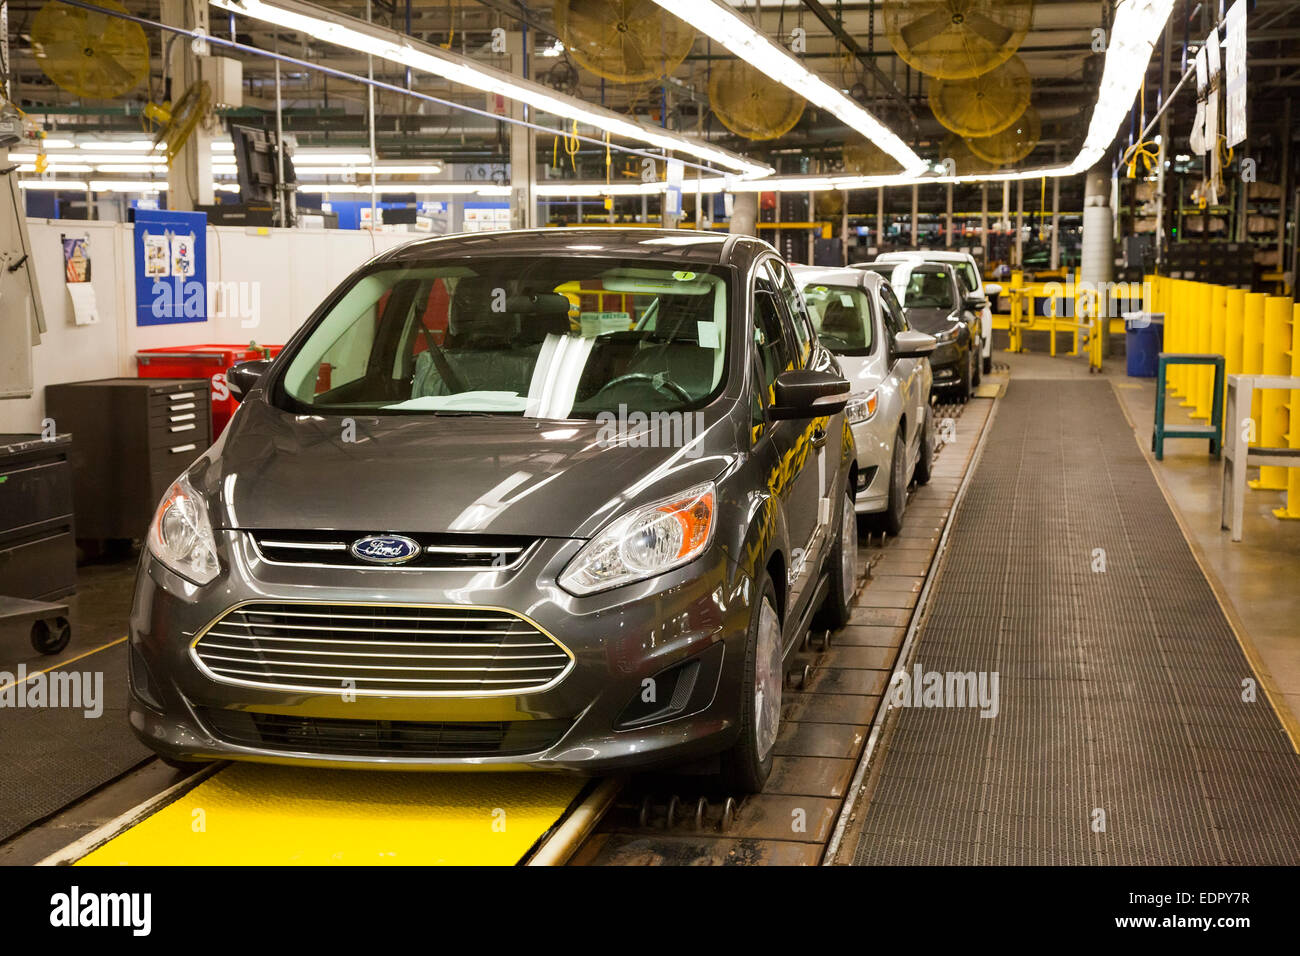 Ford wayne assembly plant address #7